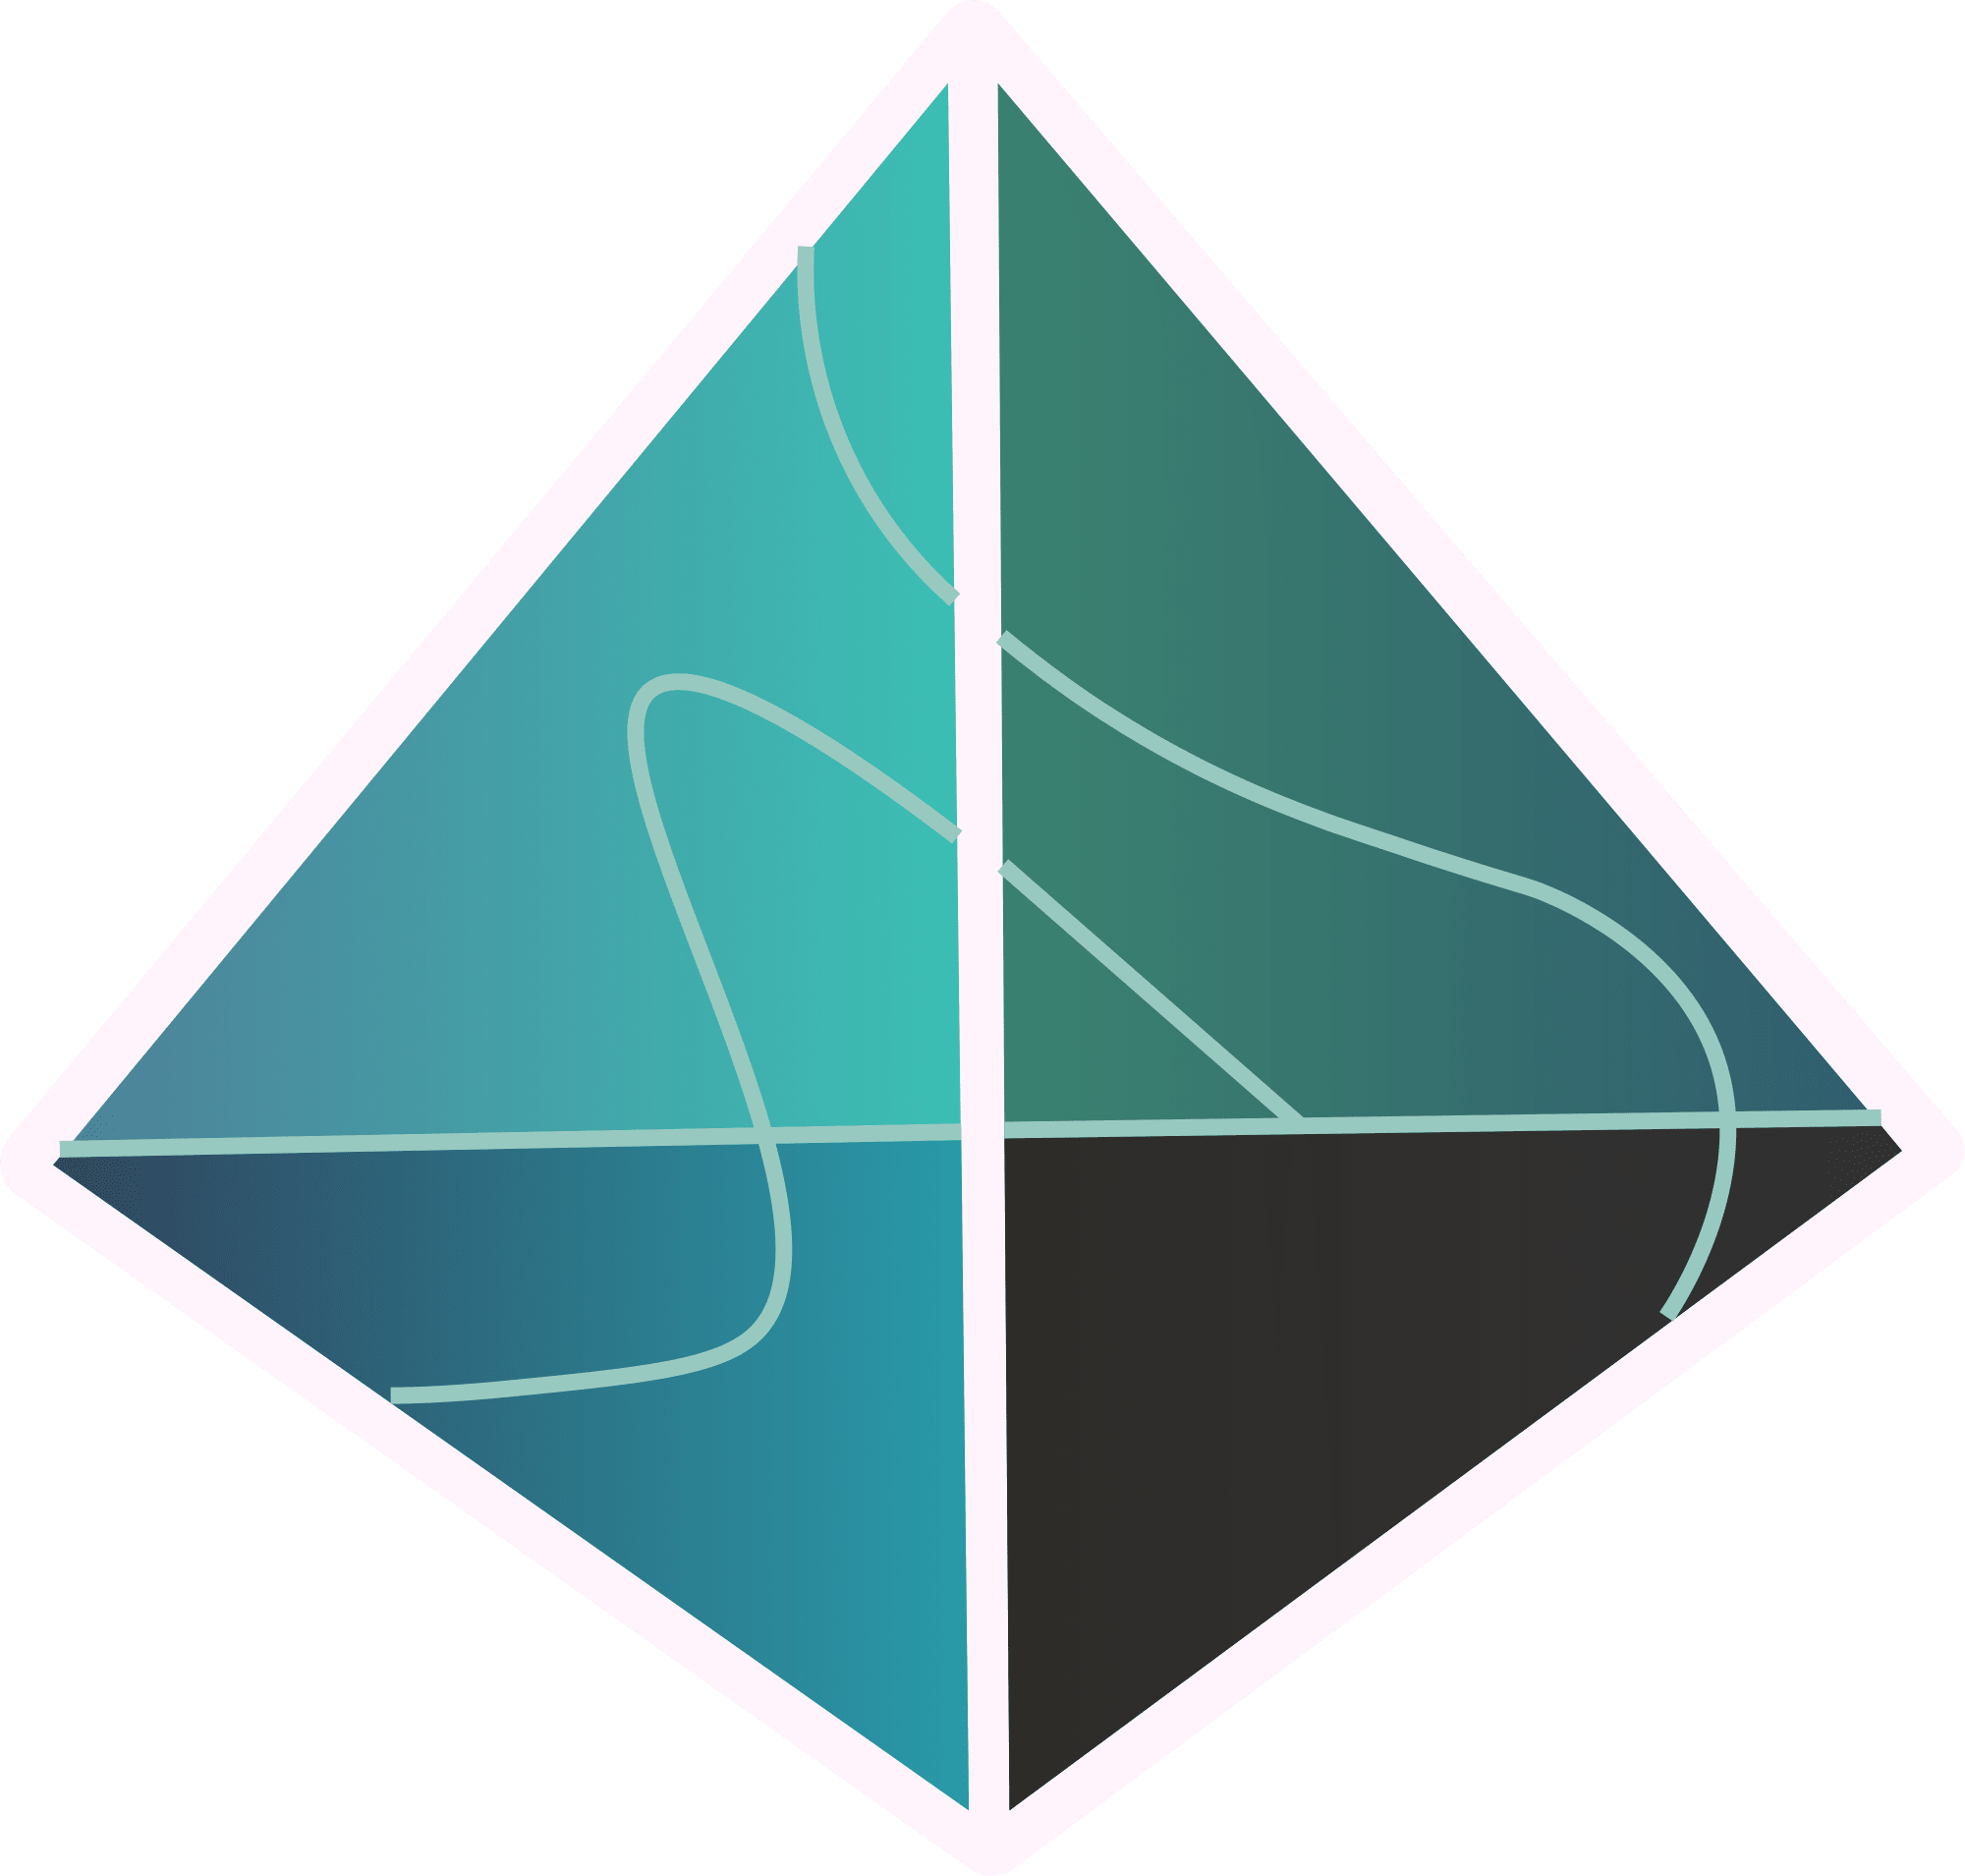 Aurora logo in png format